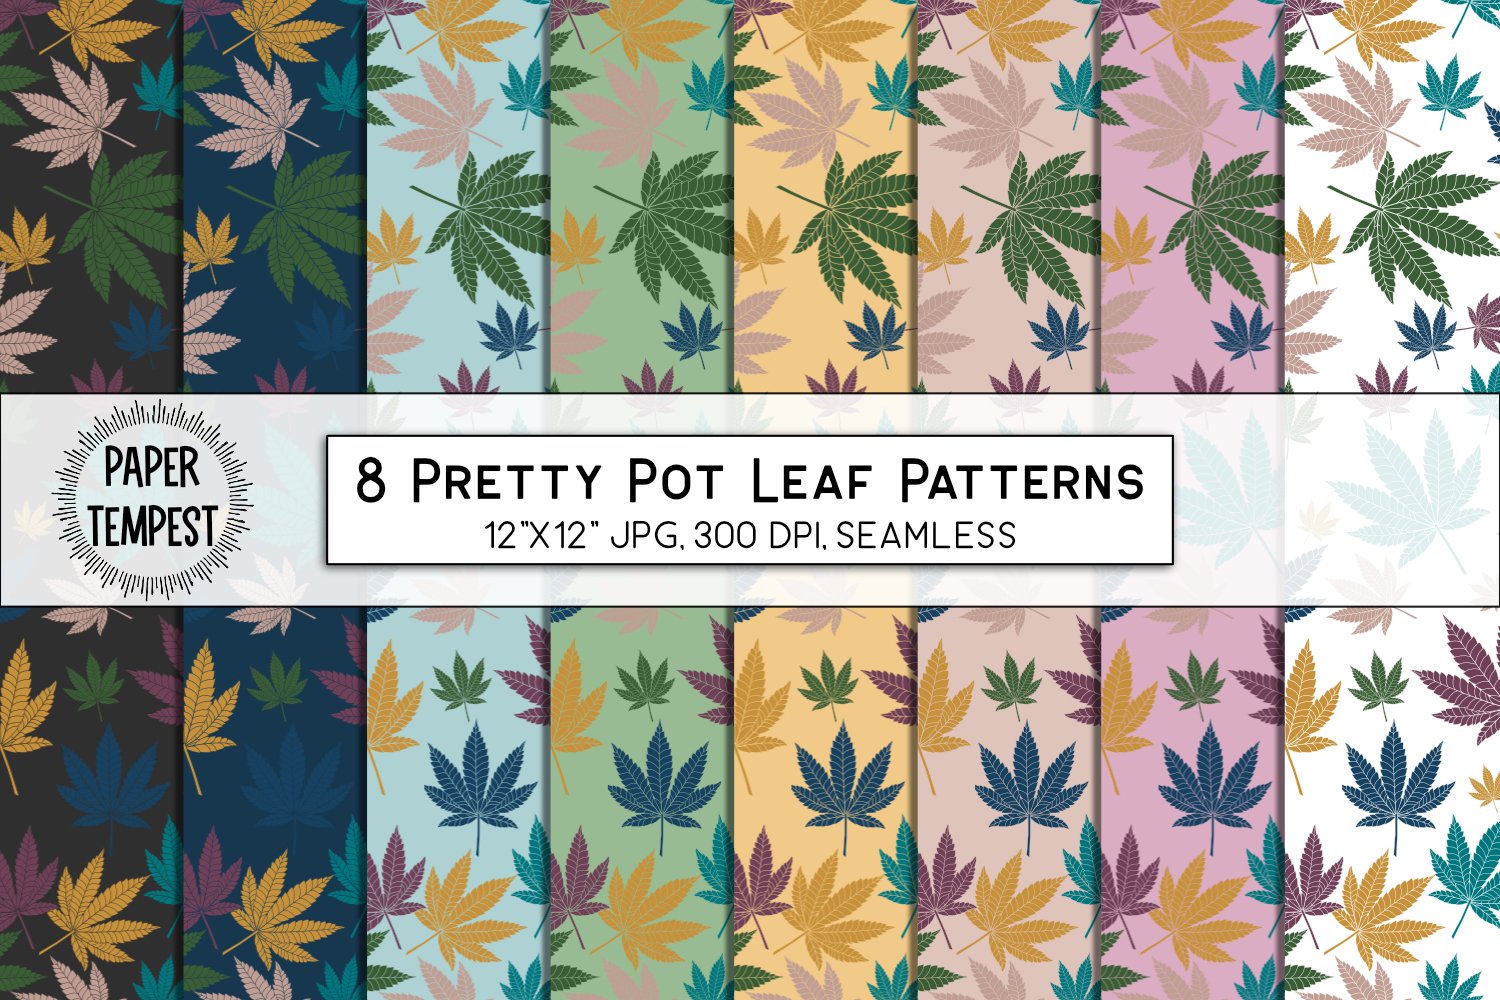 Cover image of Seamless marijuana patterns.